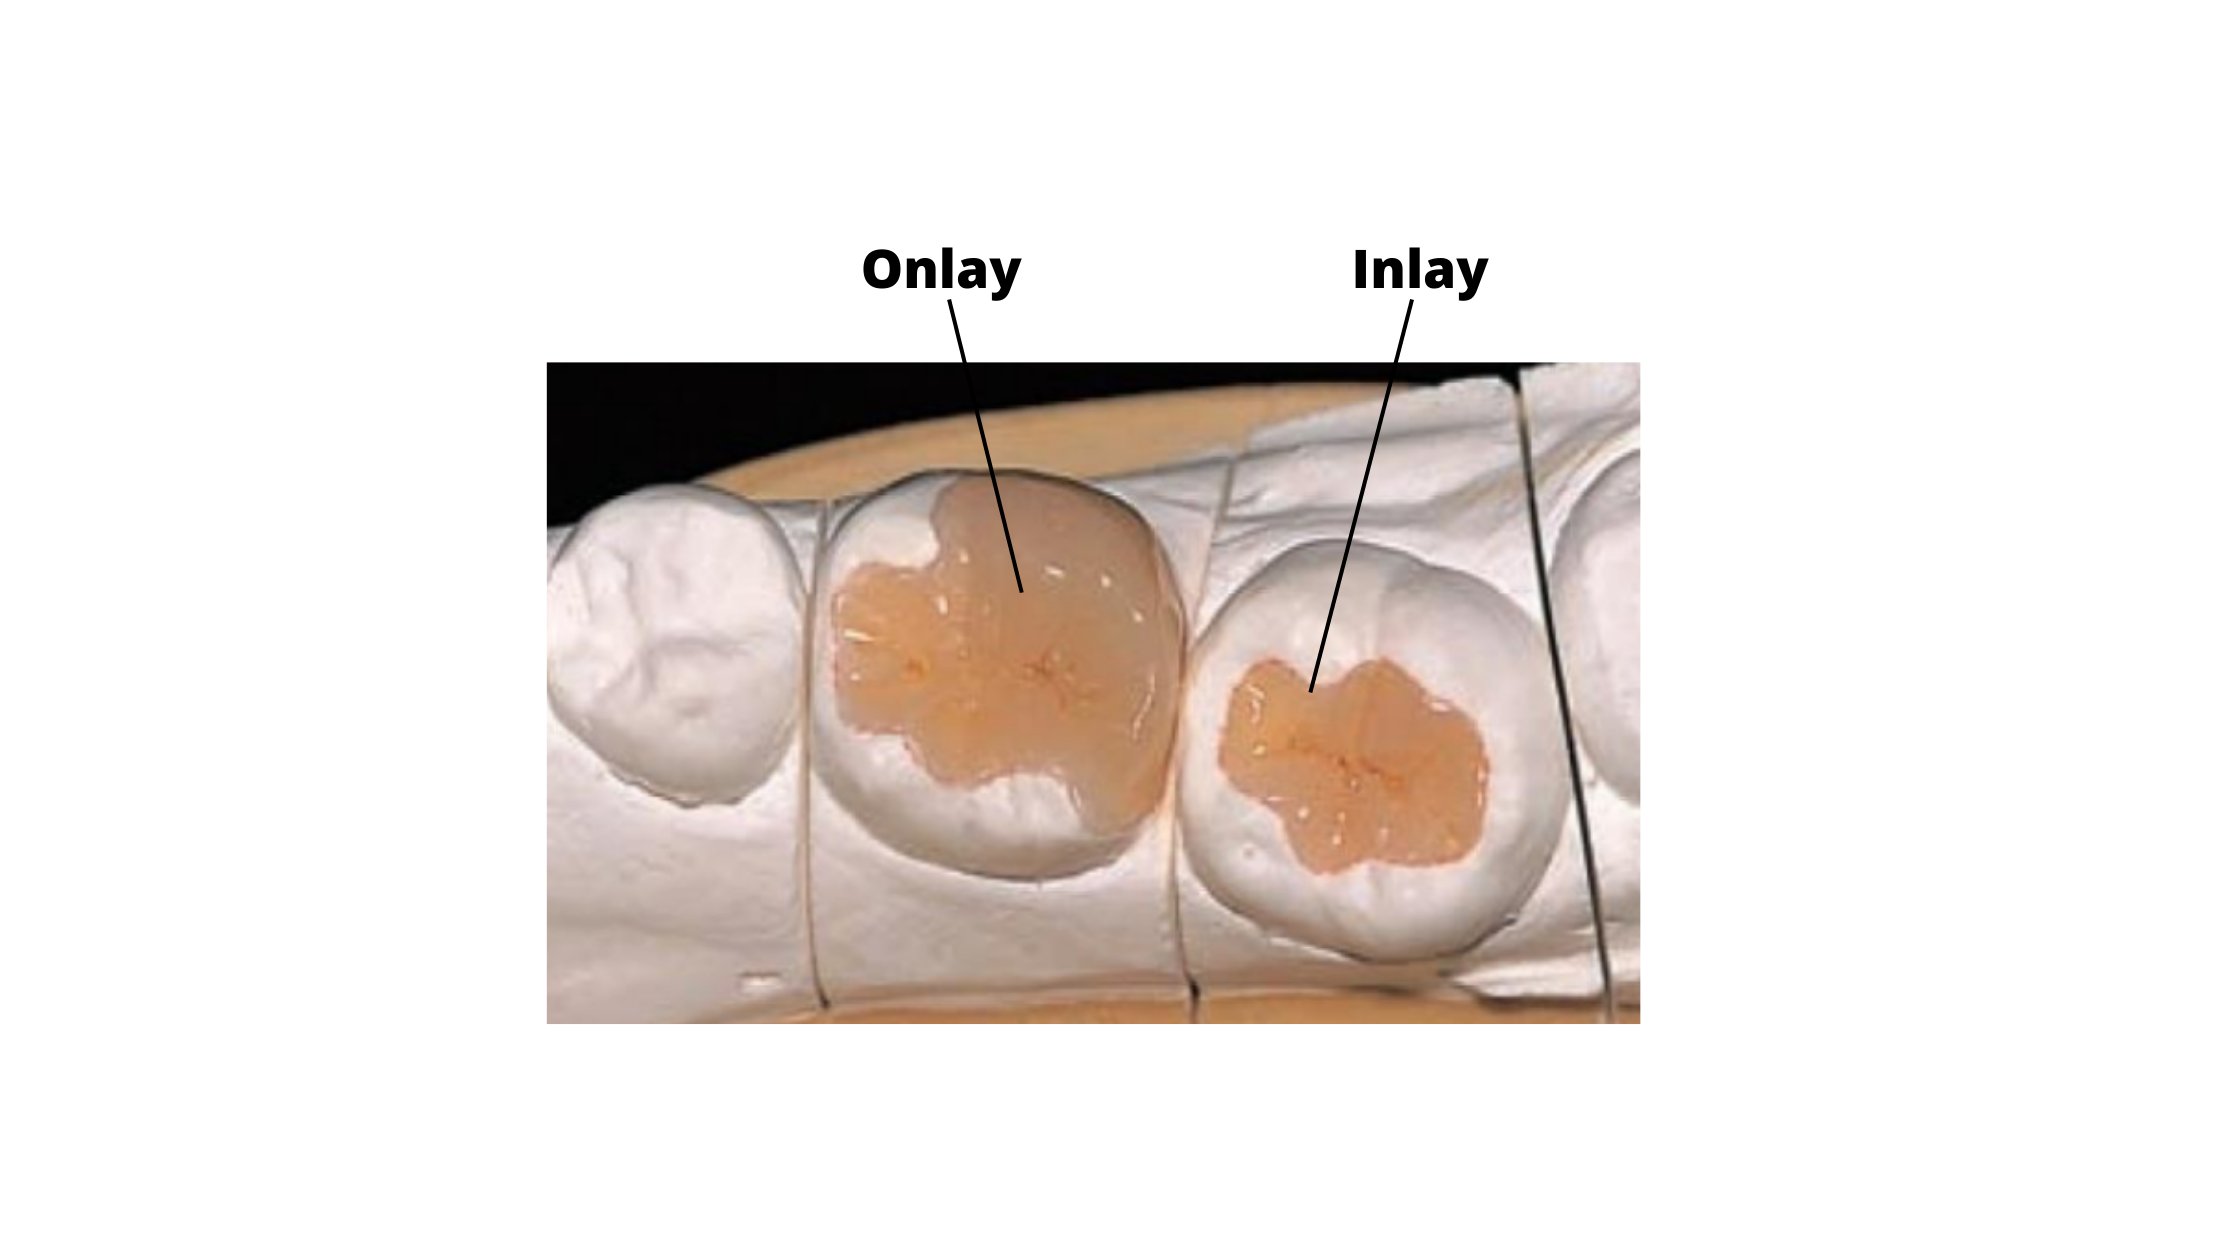 Inlay and Onlay for back teeth